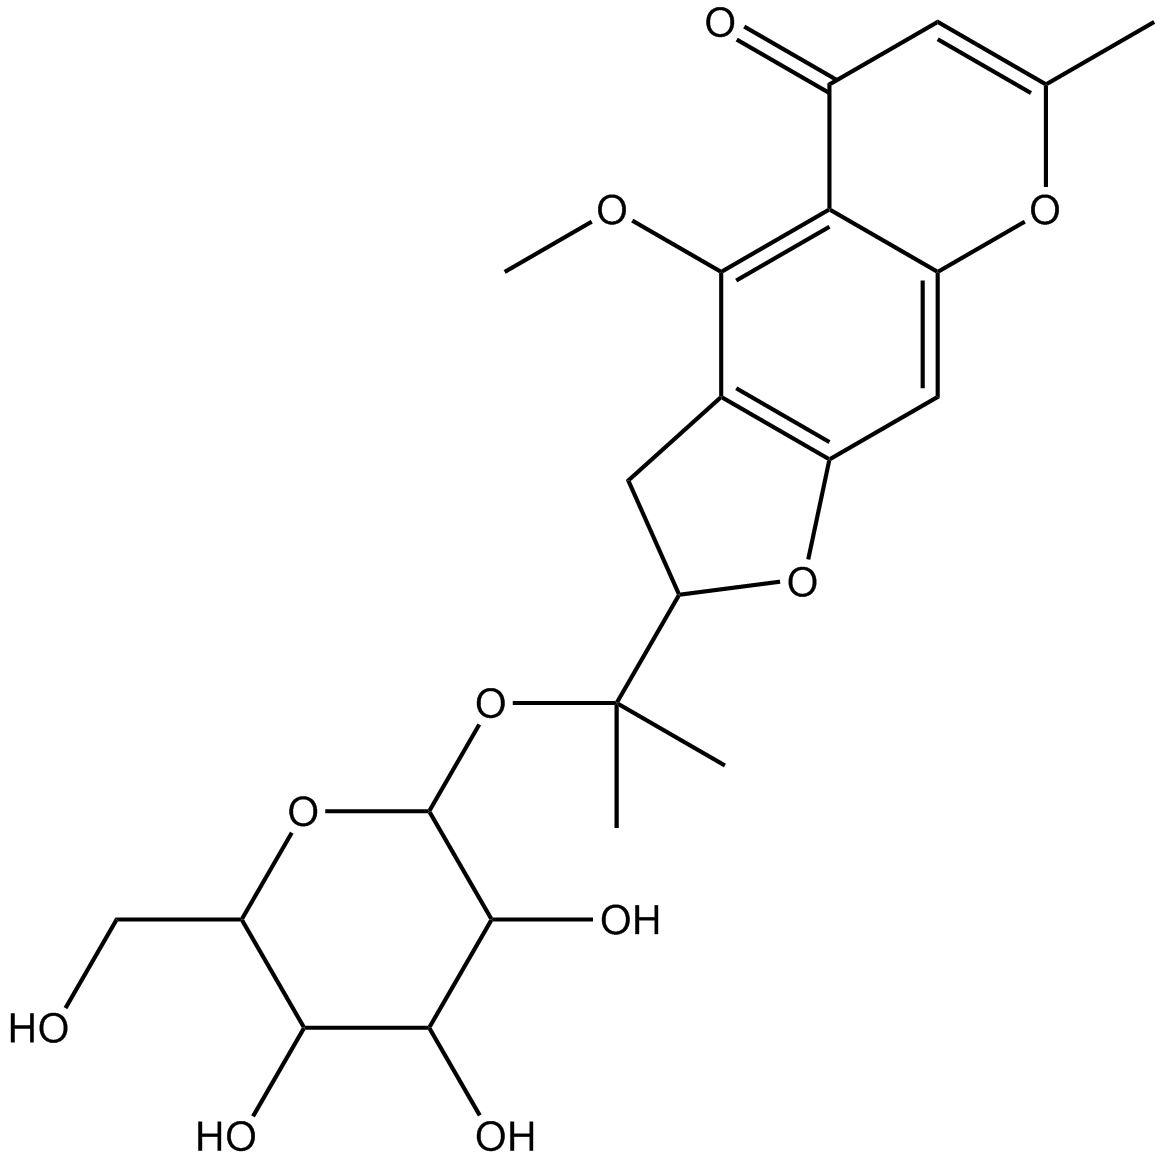 5-O-Methylvisammioside Chemische Struktur